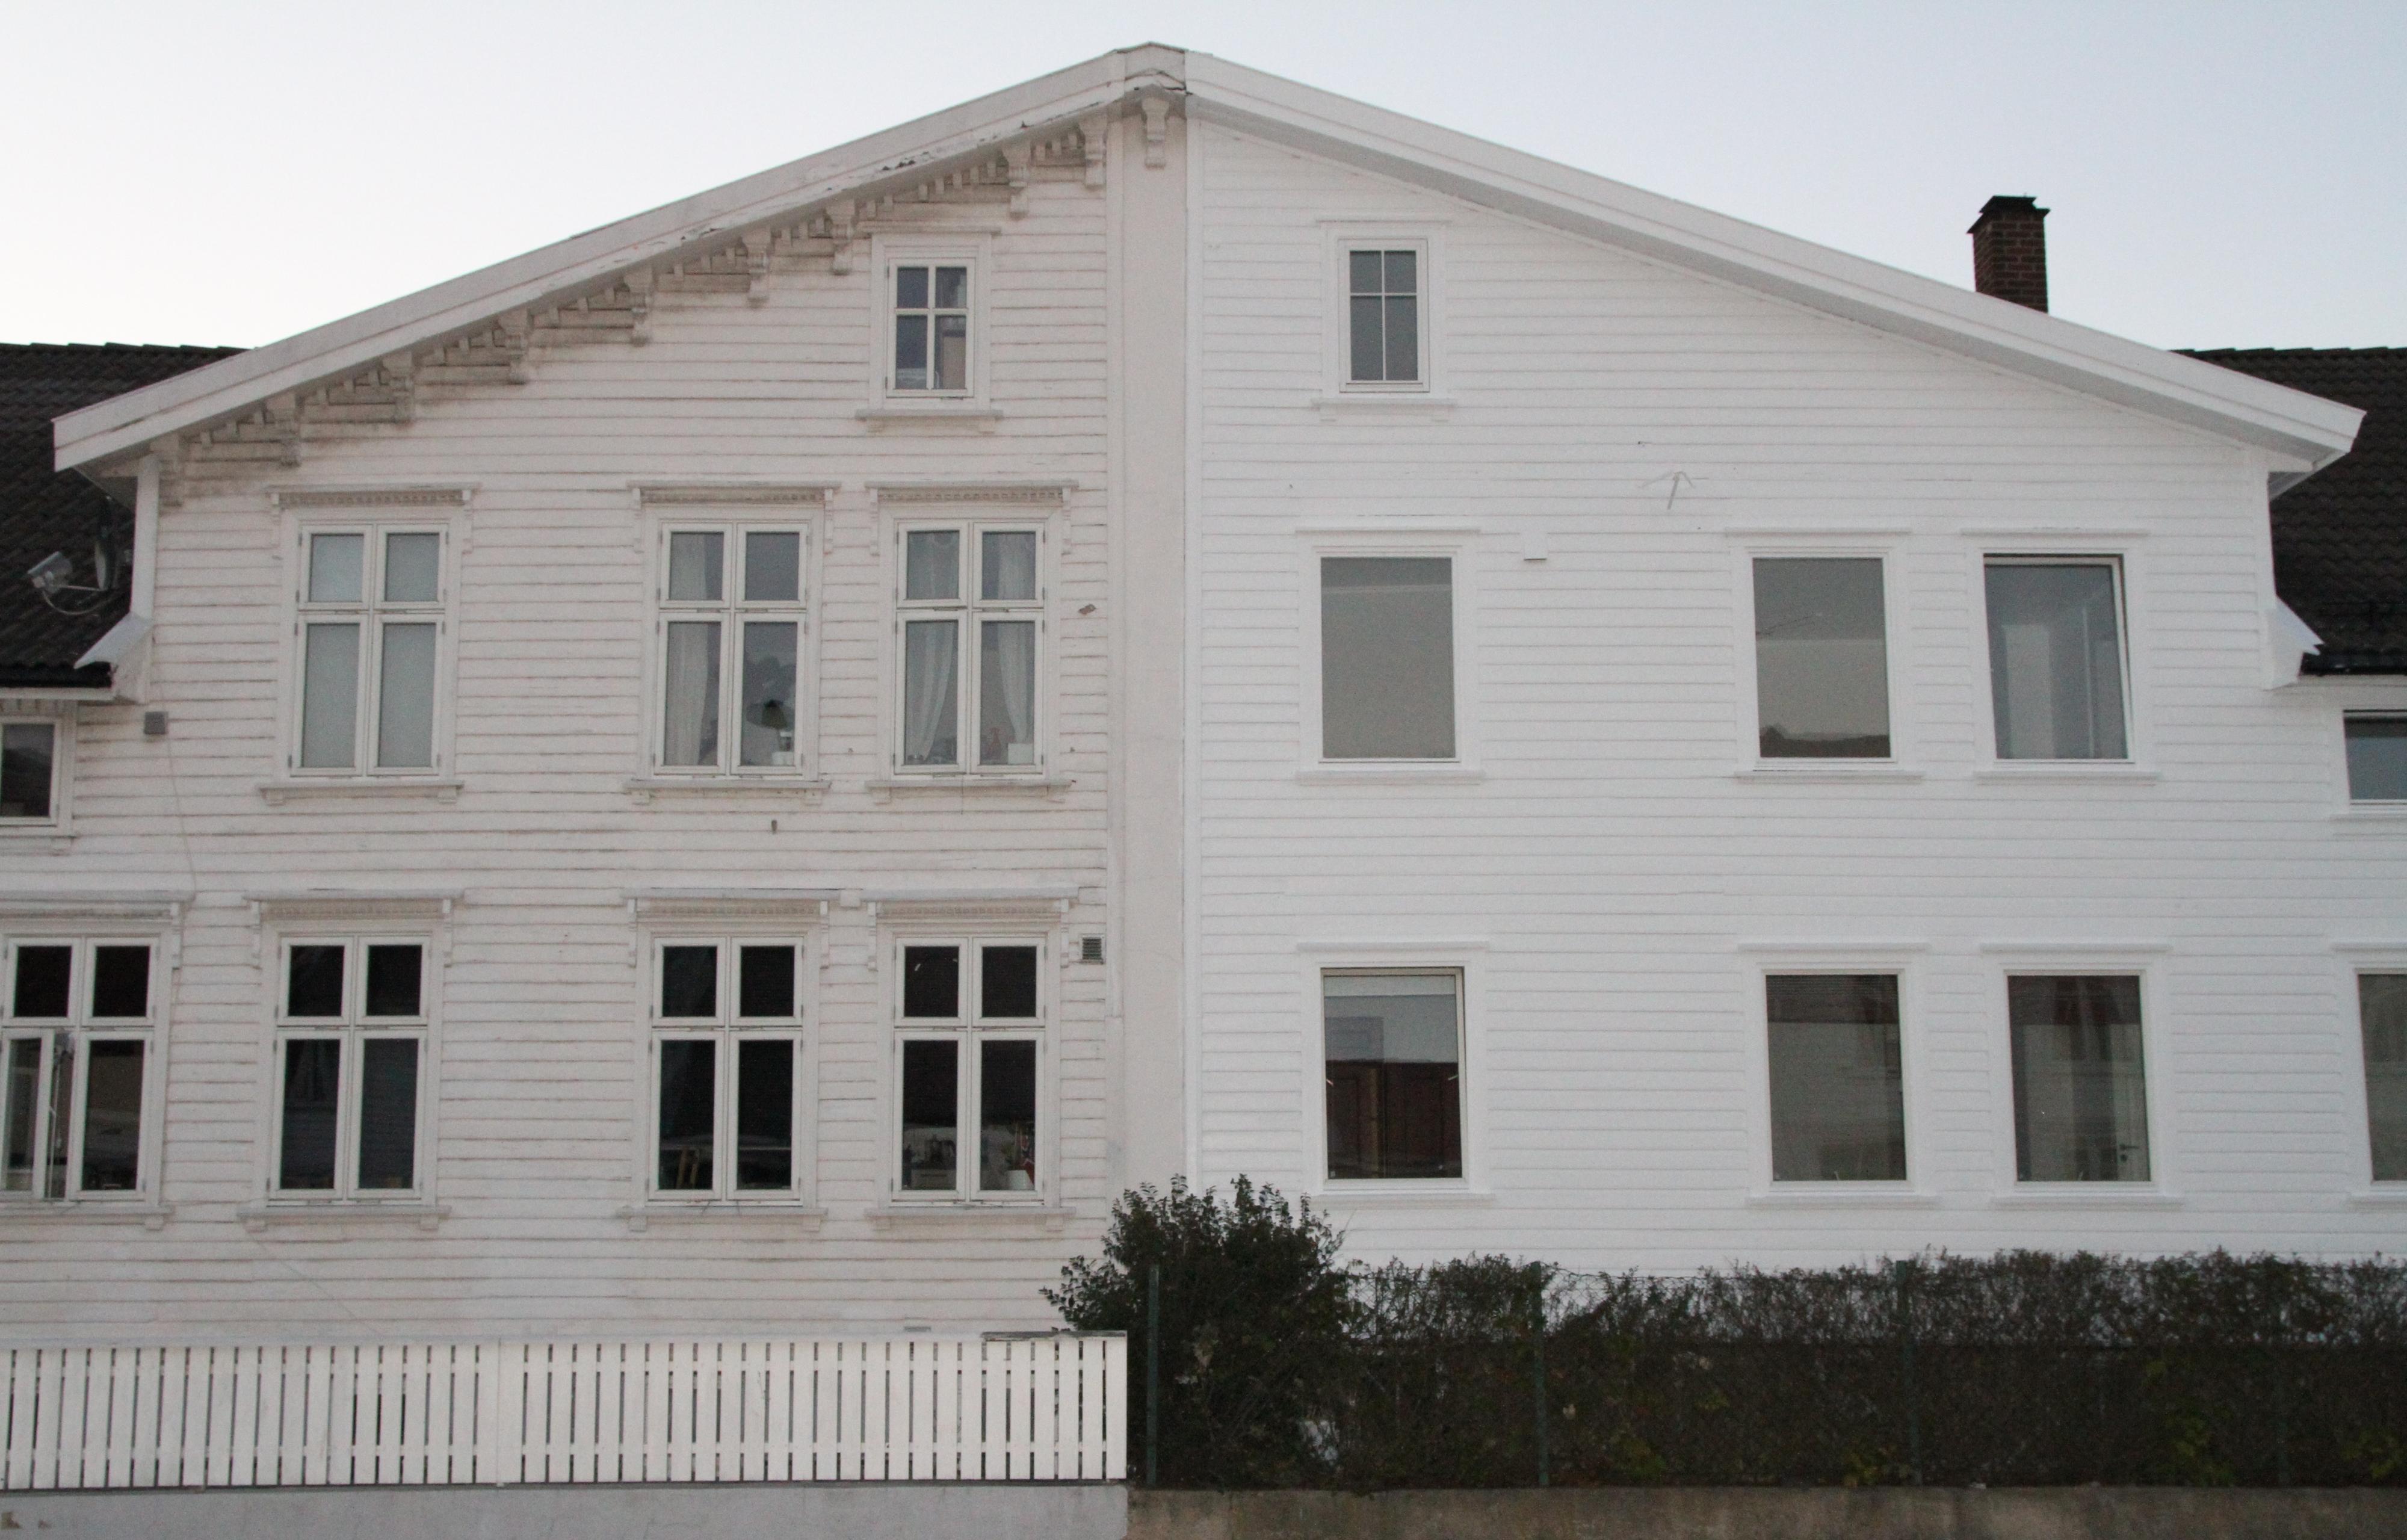 6. plass, Kristiansand.Foto: Øystein Birkenes